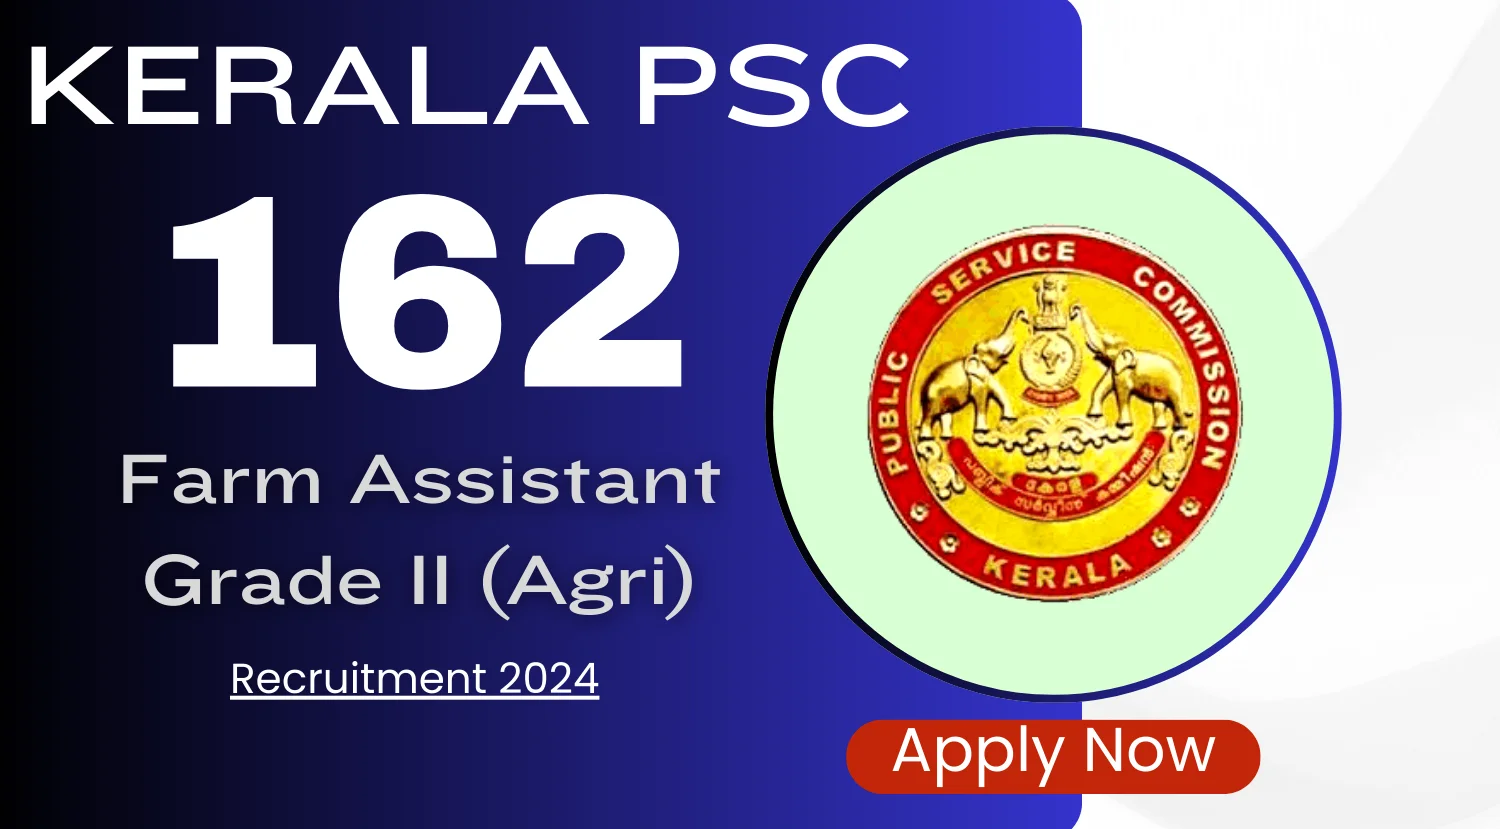 Kerala PSC Recruitment 2024 for 162 Farm Assistant Grade II (Agri) Position